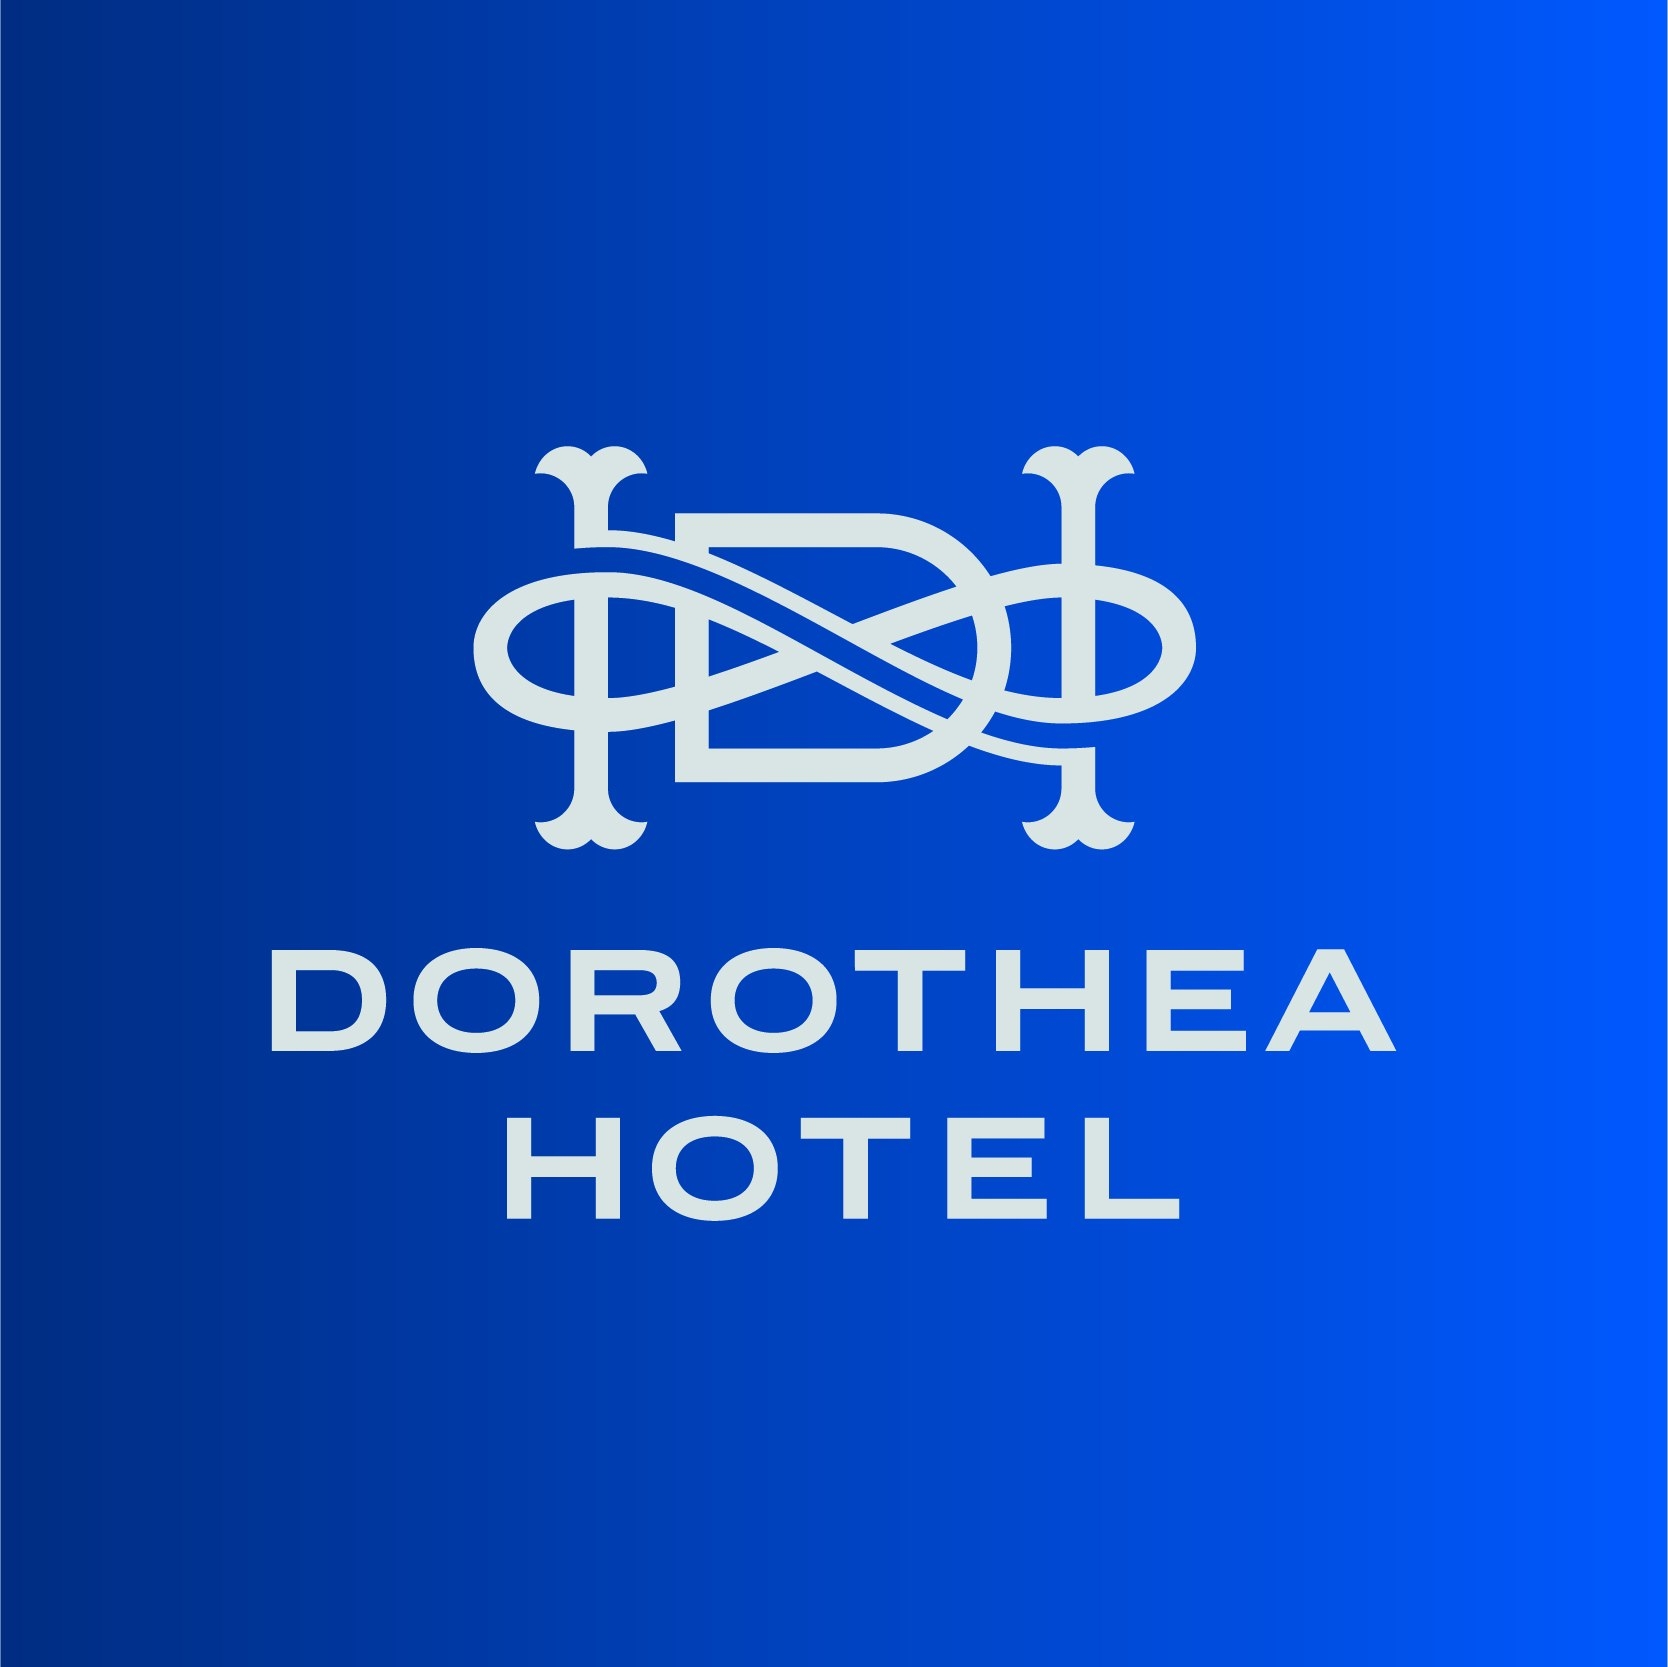 Dorothea Hotel Logo